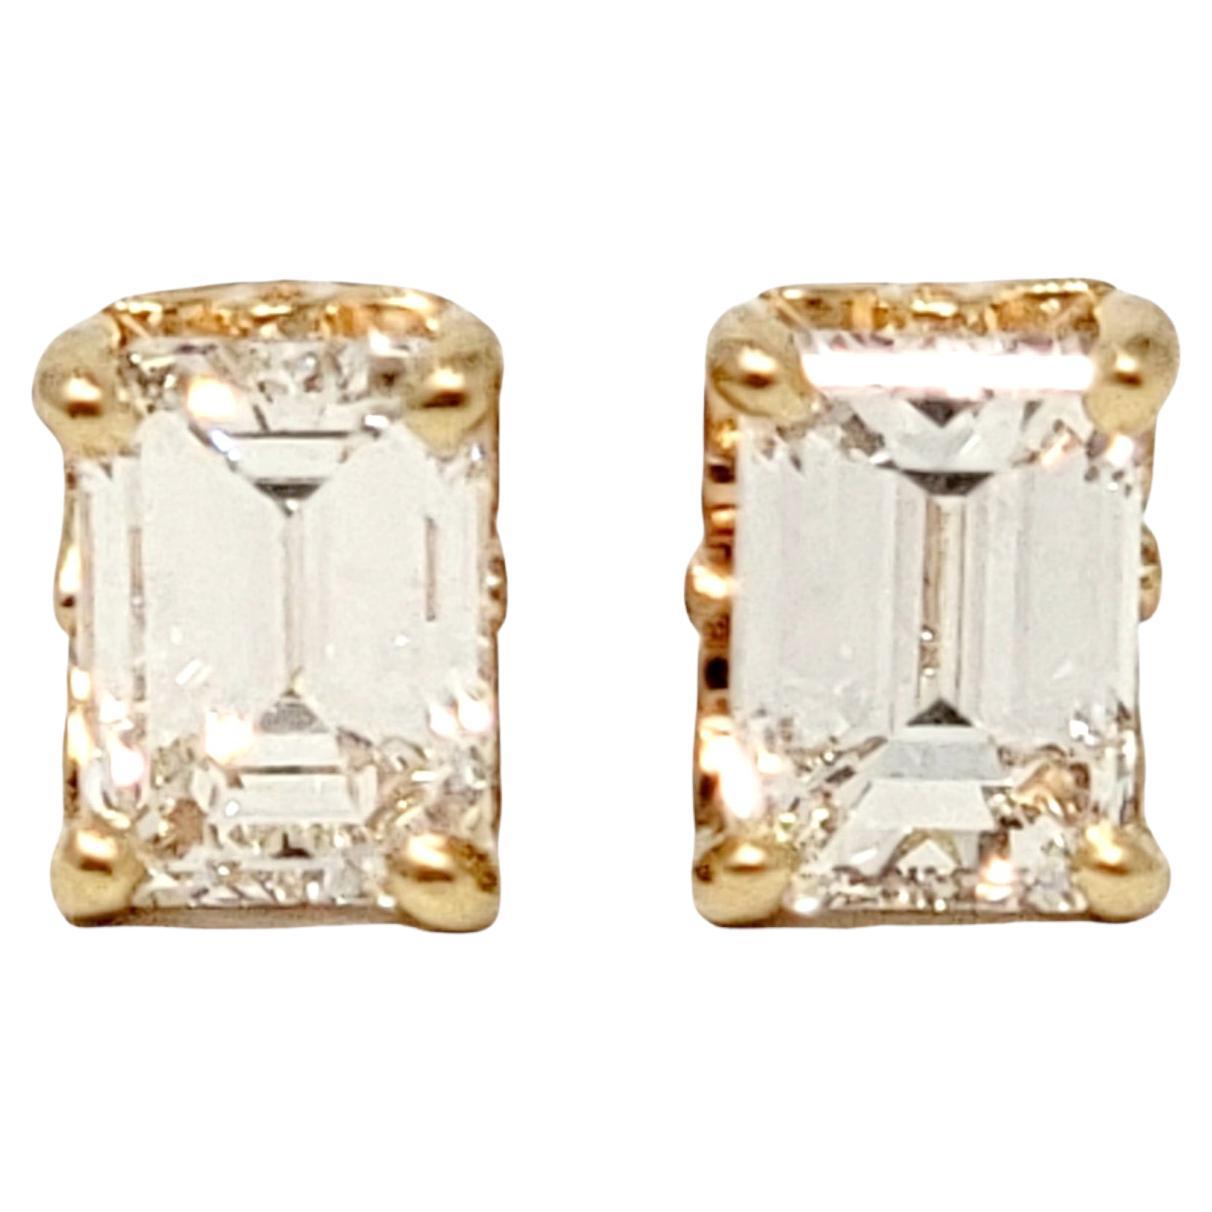 1.05 Carat Total Emerald Cut Diamond Stud Earrings in 14 Karat Yellow Gold